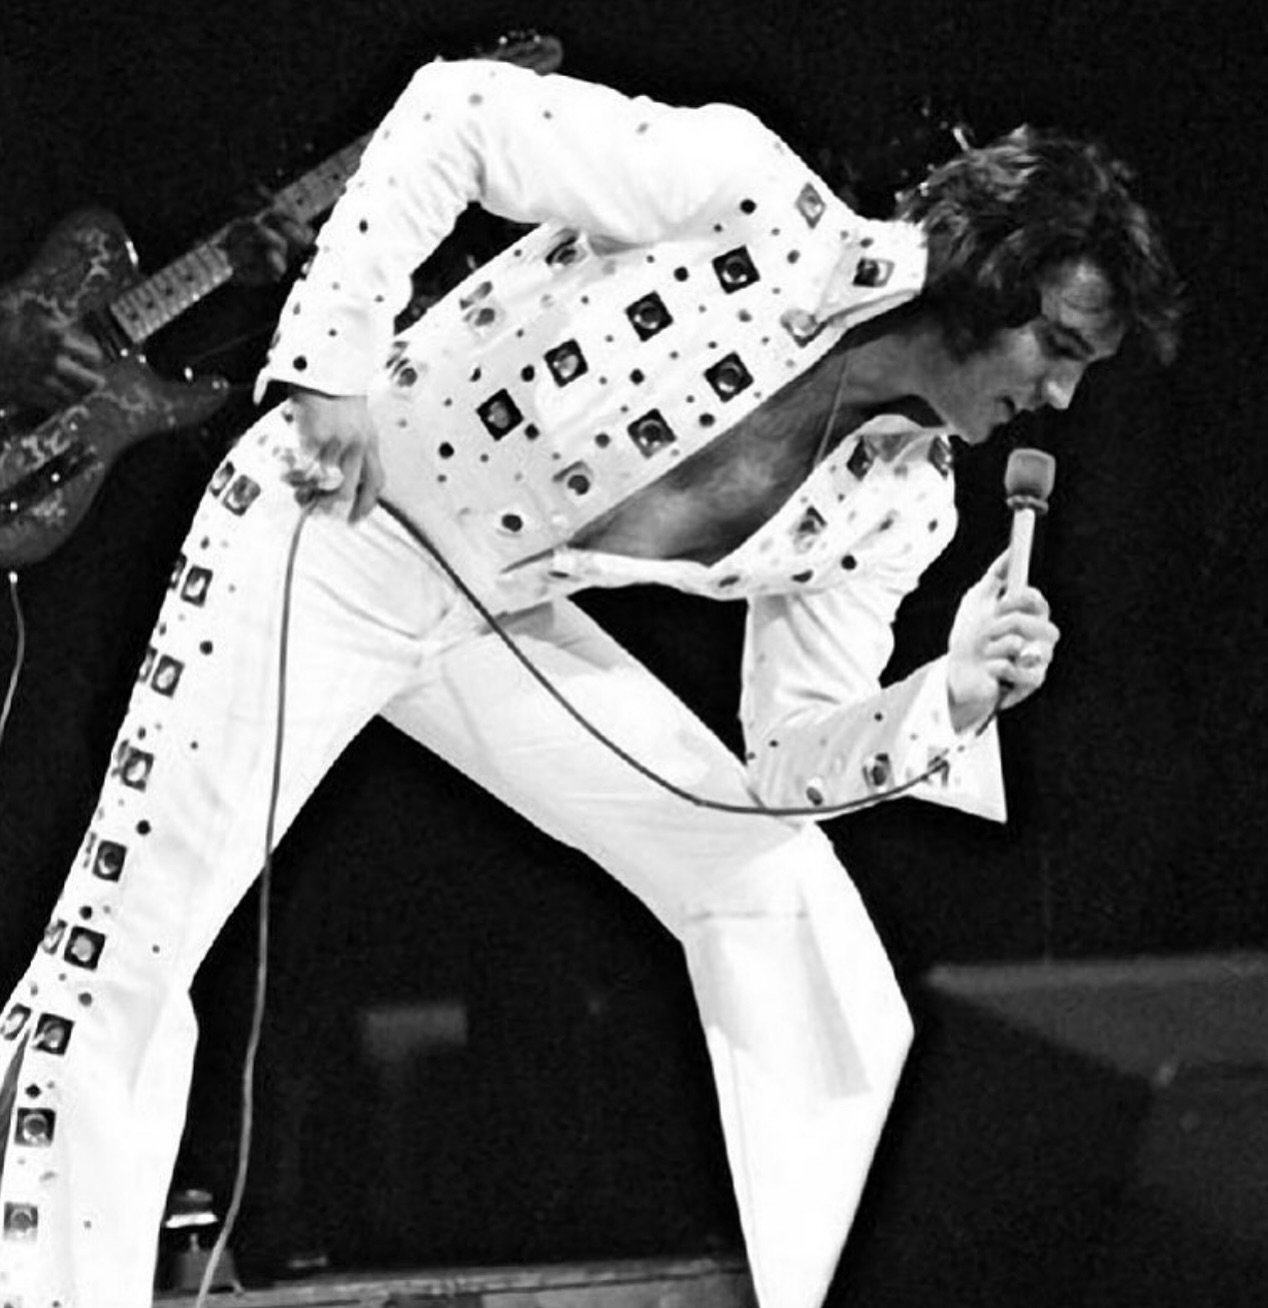 Elvis having fun with the New York audience. 

⚡️
⚡️
⚡️
⚡️
⚡️
⚡️
⚡️
#elvis #elvispresley #alwayselvis #graceland #thekimgofrocknroll #theking #tcb #memphis #tennessee #sunrecords #rca #jumpsuit #ontour #newyork #msg #thegarden